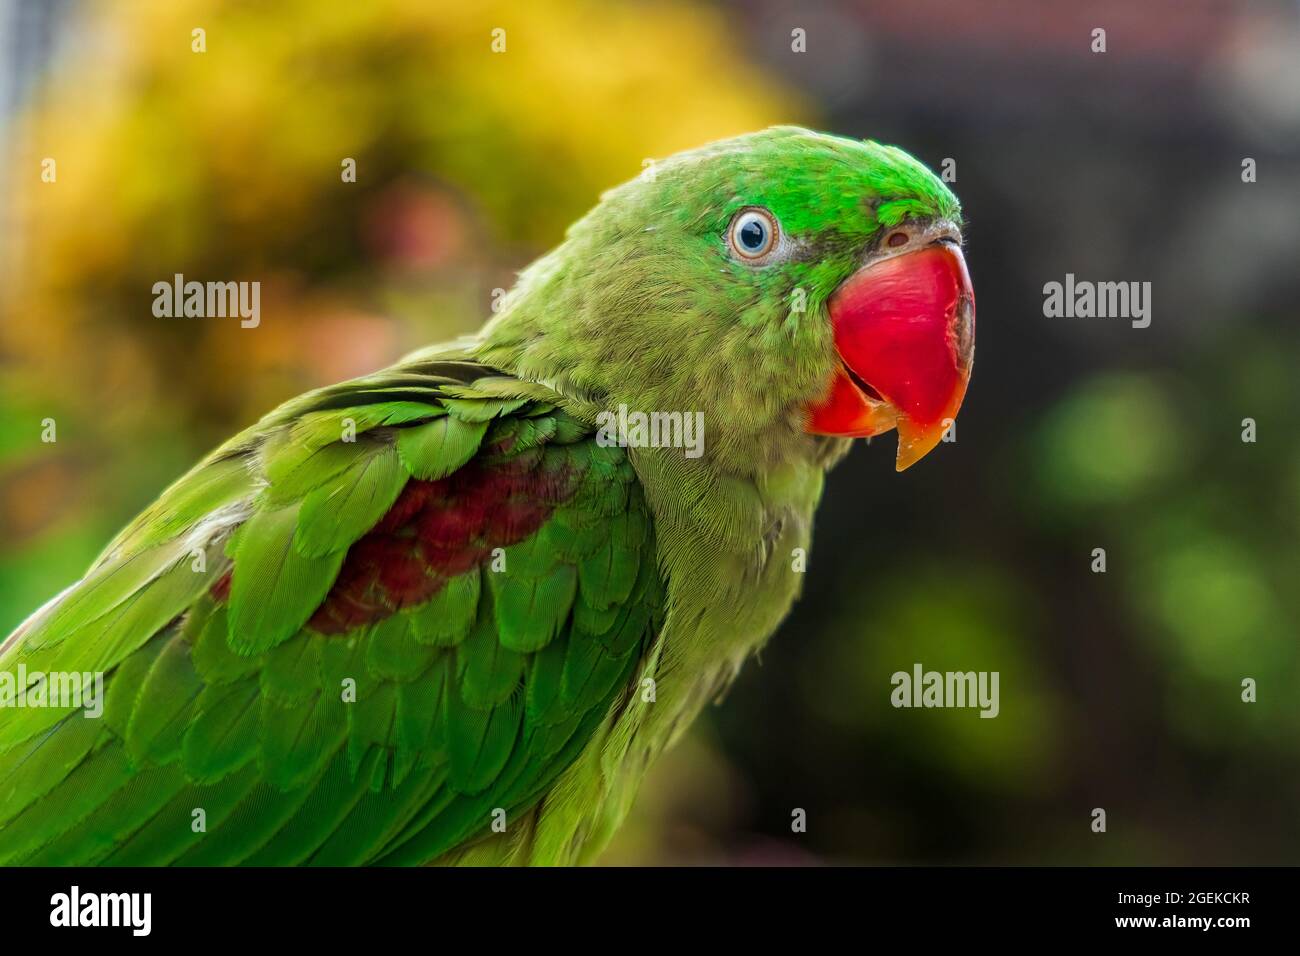 Closeup of a 4 month old Alexandrine Parakeet parrot. Stock Photo